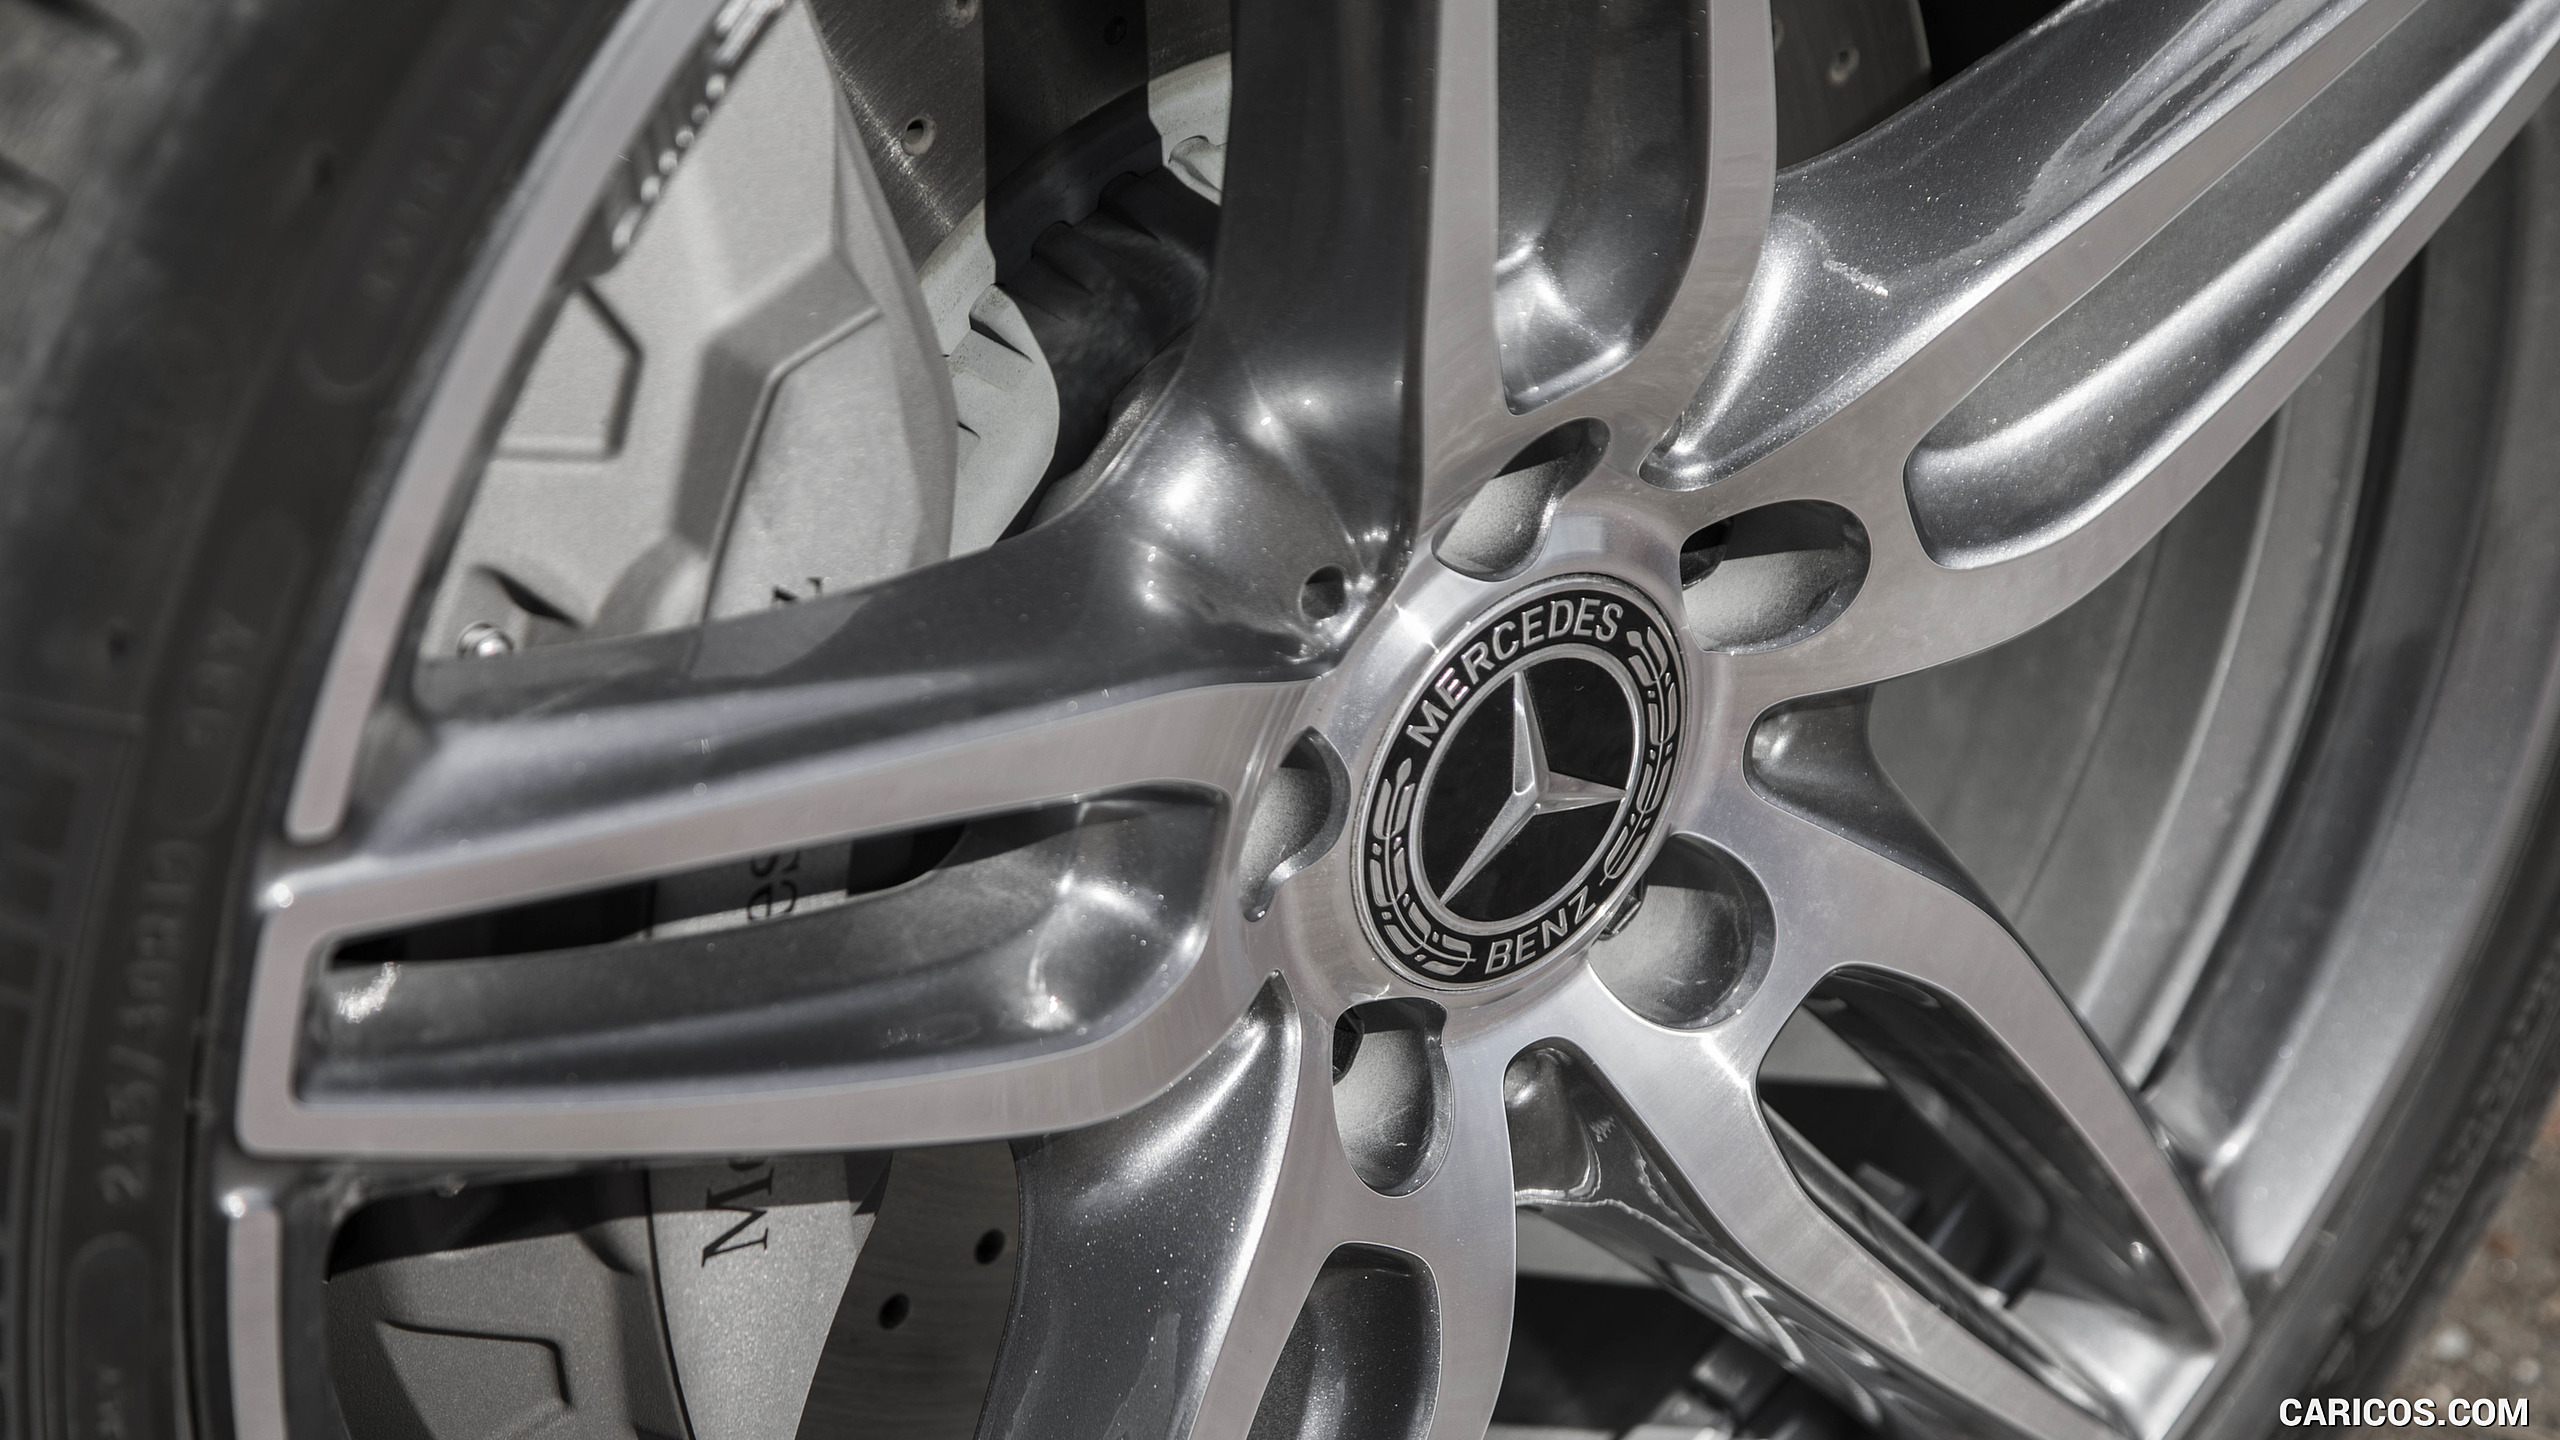 2018 Mercedes-Benz E-Class E400 4MATIC Coupe (US-Spec) - Wheel, #287 of 365